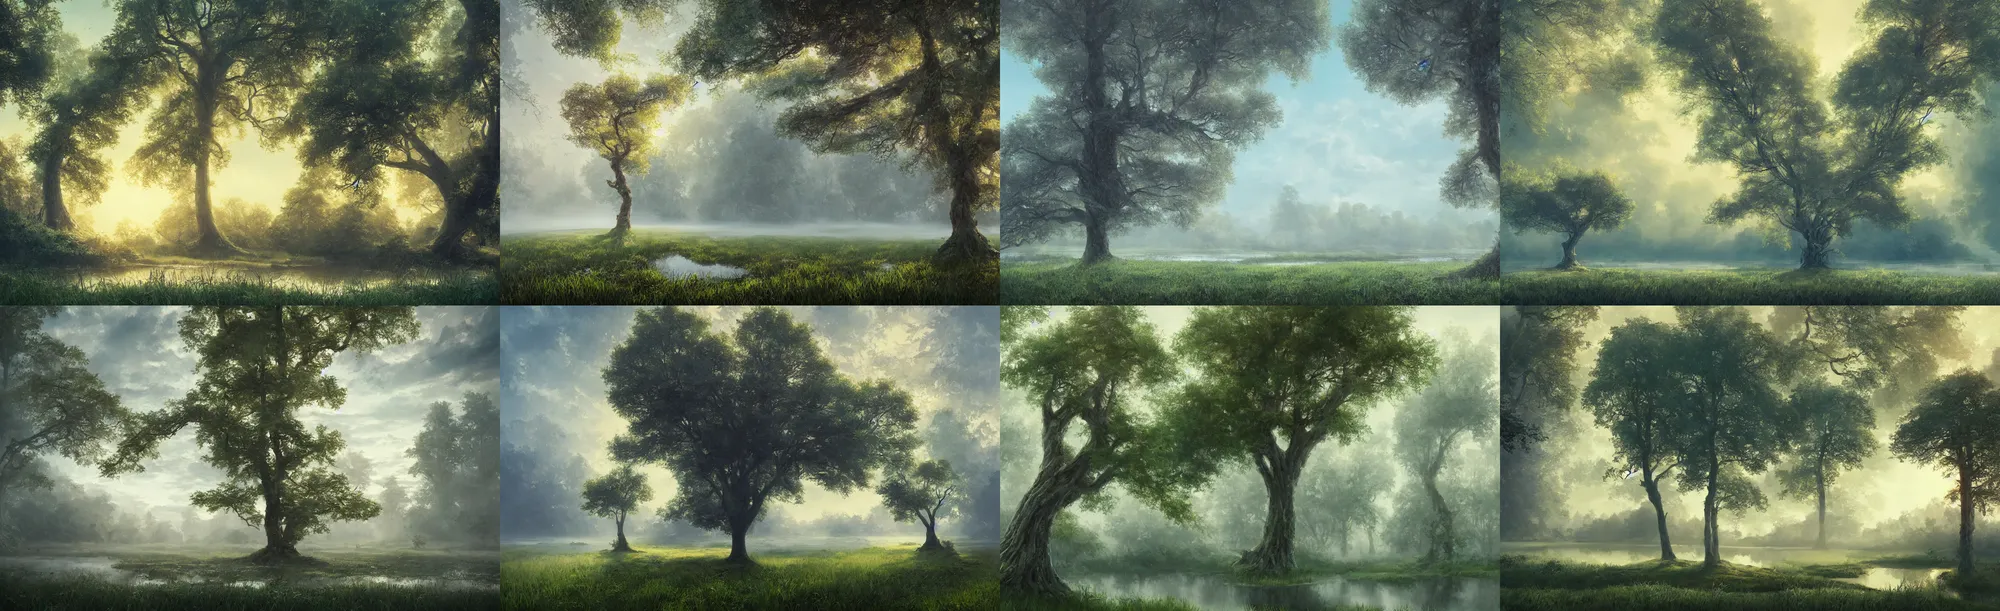 Prompt: a tree near a pond, mist and swirly clouds in the background, fantastic landscape, hyperrealism, no blur, 4k resolution, ultra detailed, style of Anton Fadeev, Ivan Shishkin, John Berkey